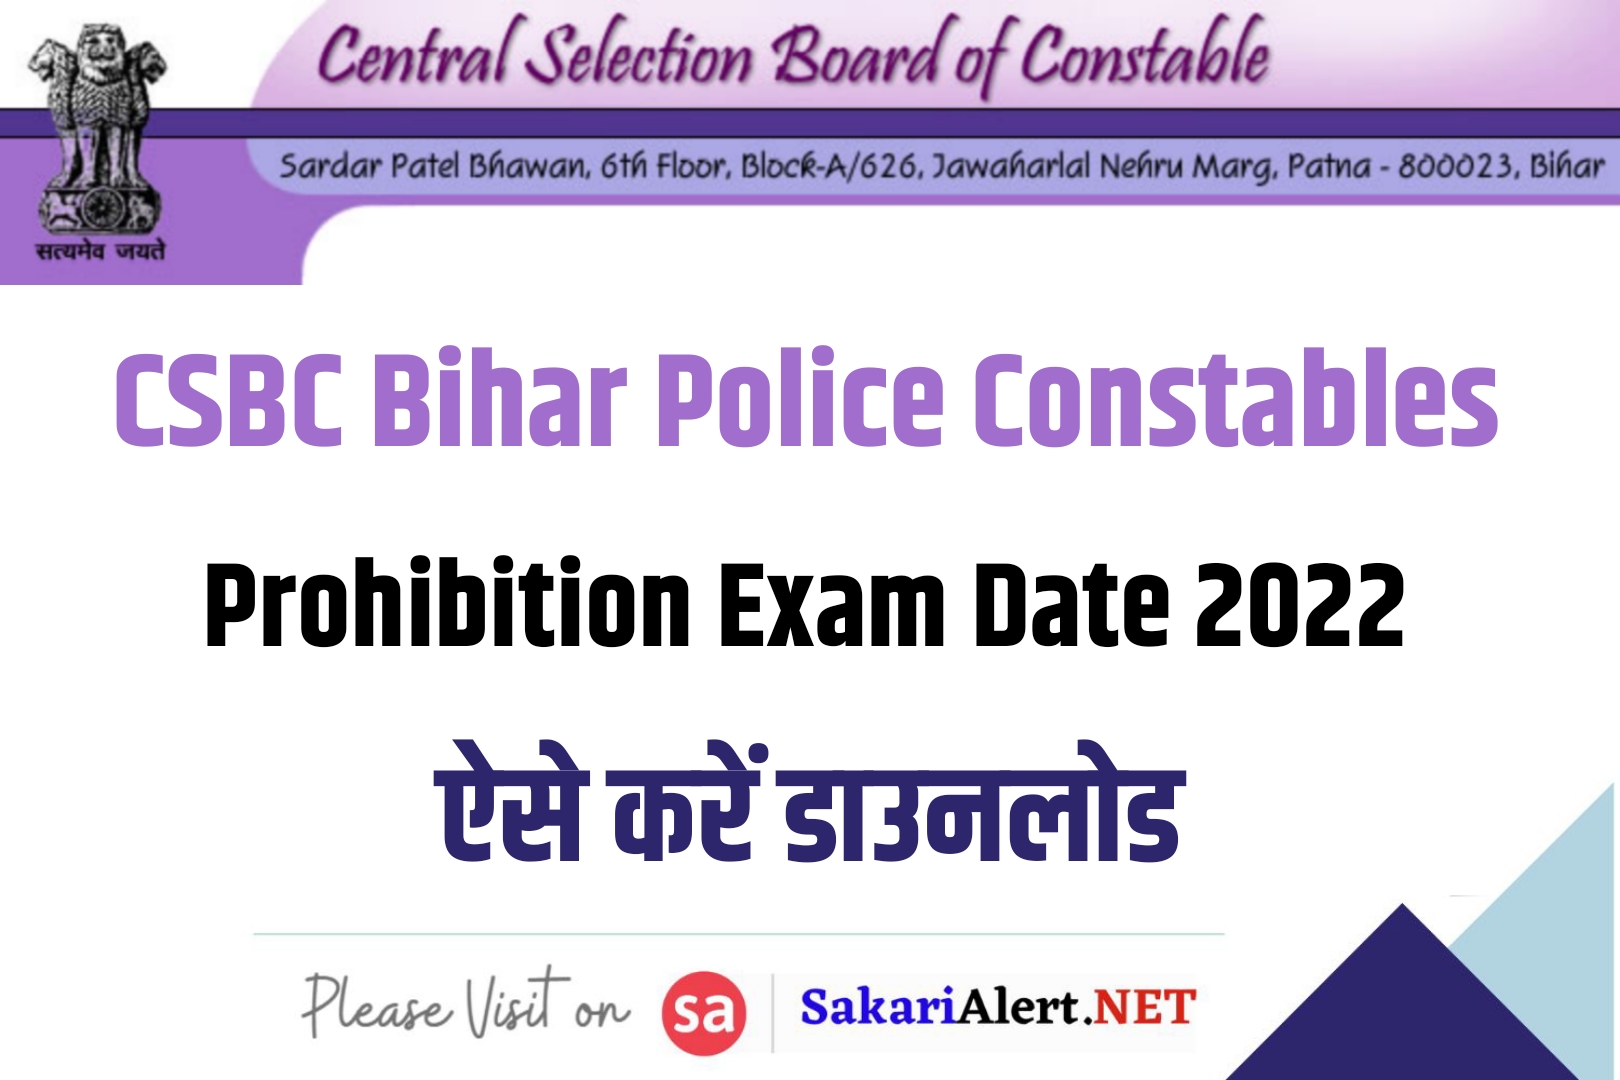 CSBC Bihar Police Constables Prohibition Exam Date 2022 | बिहार प्रोहिबिशन कांस्टेबल परीक्षा तिथि